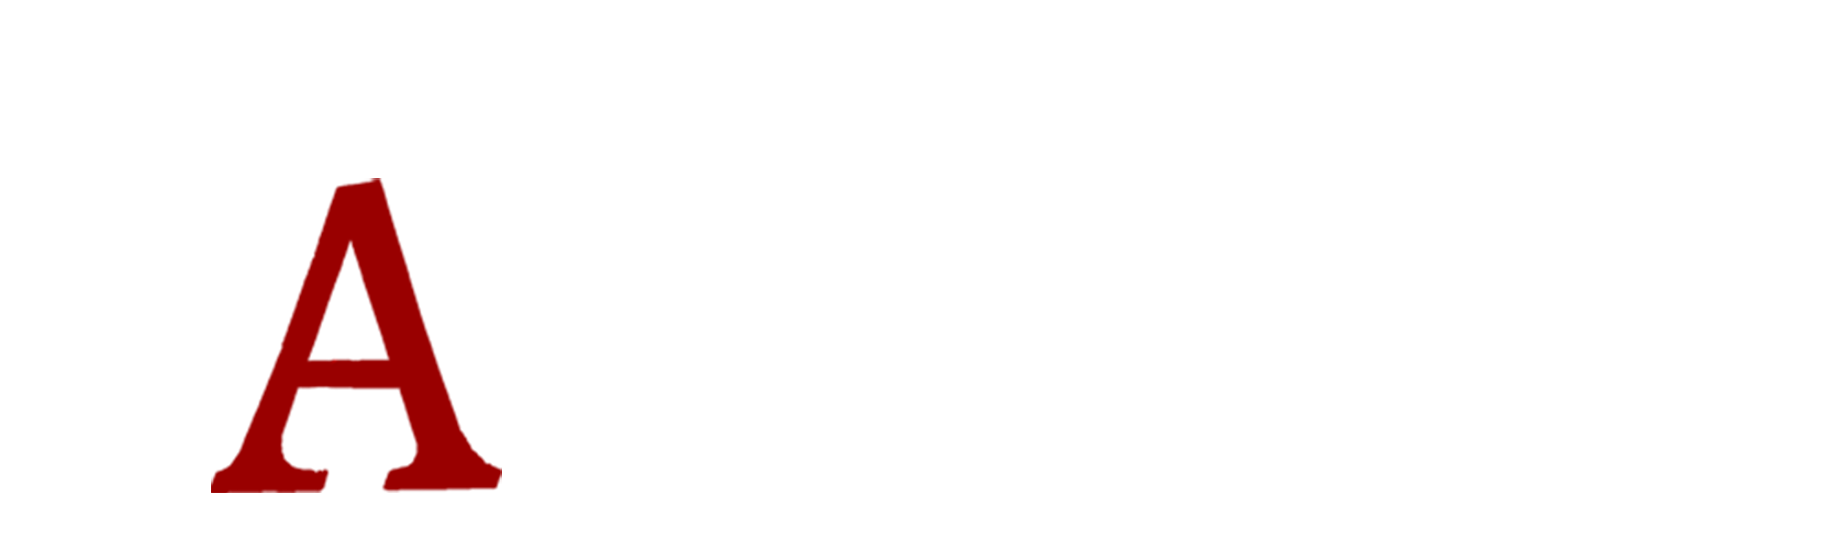 Menlo-Atherton Little League